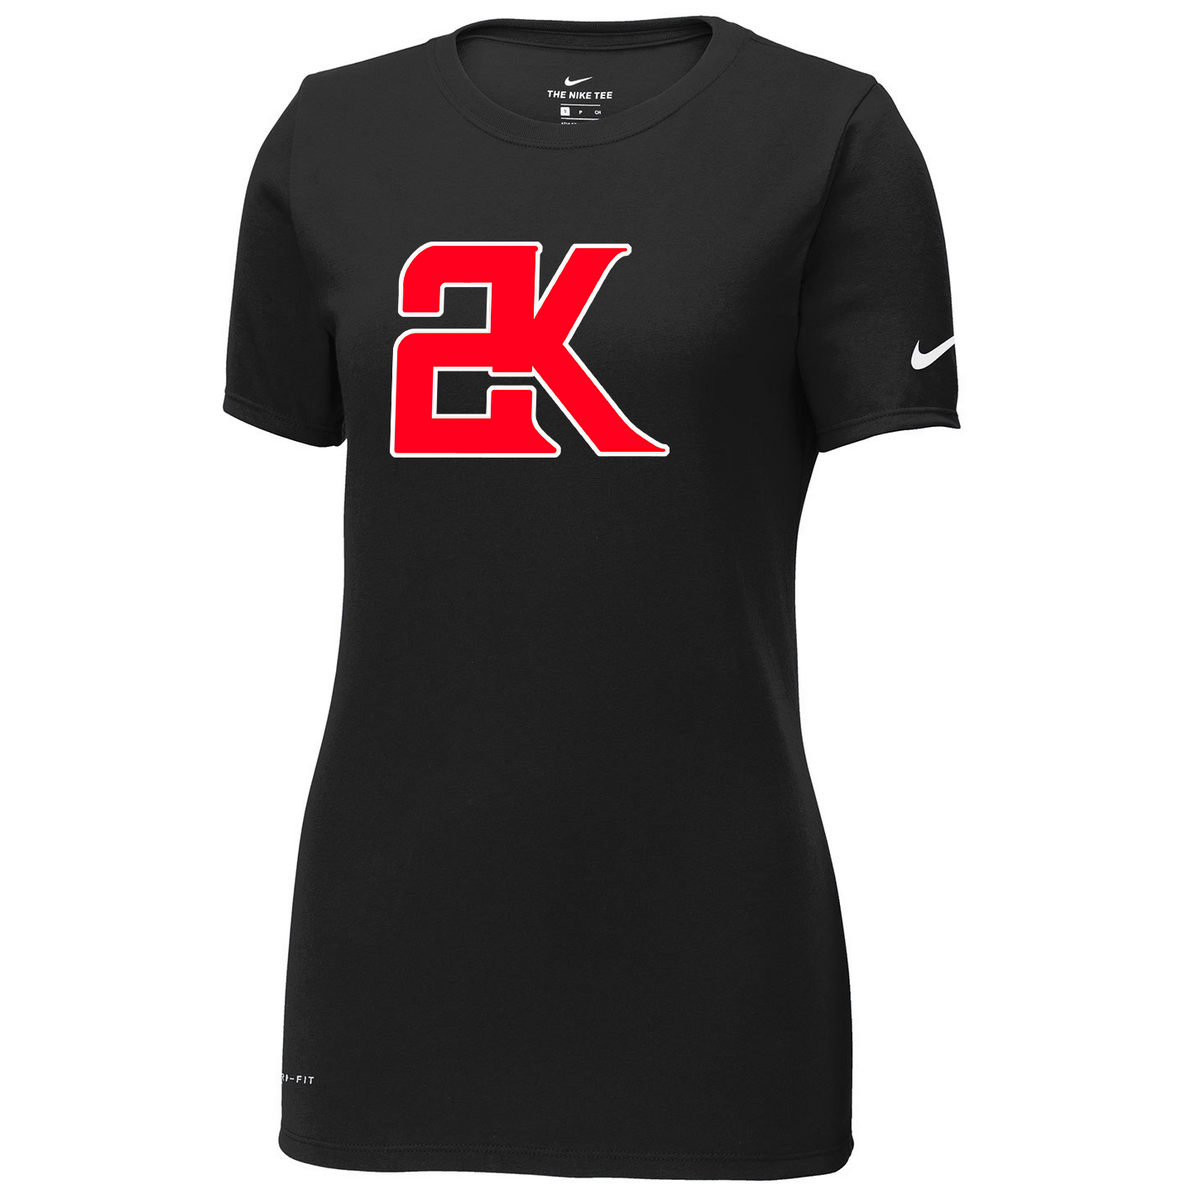 2K Softball Nike Ladies Dri-FIT Tee